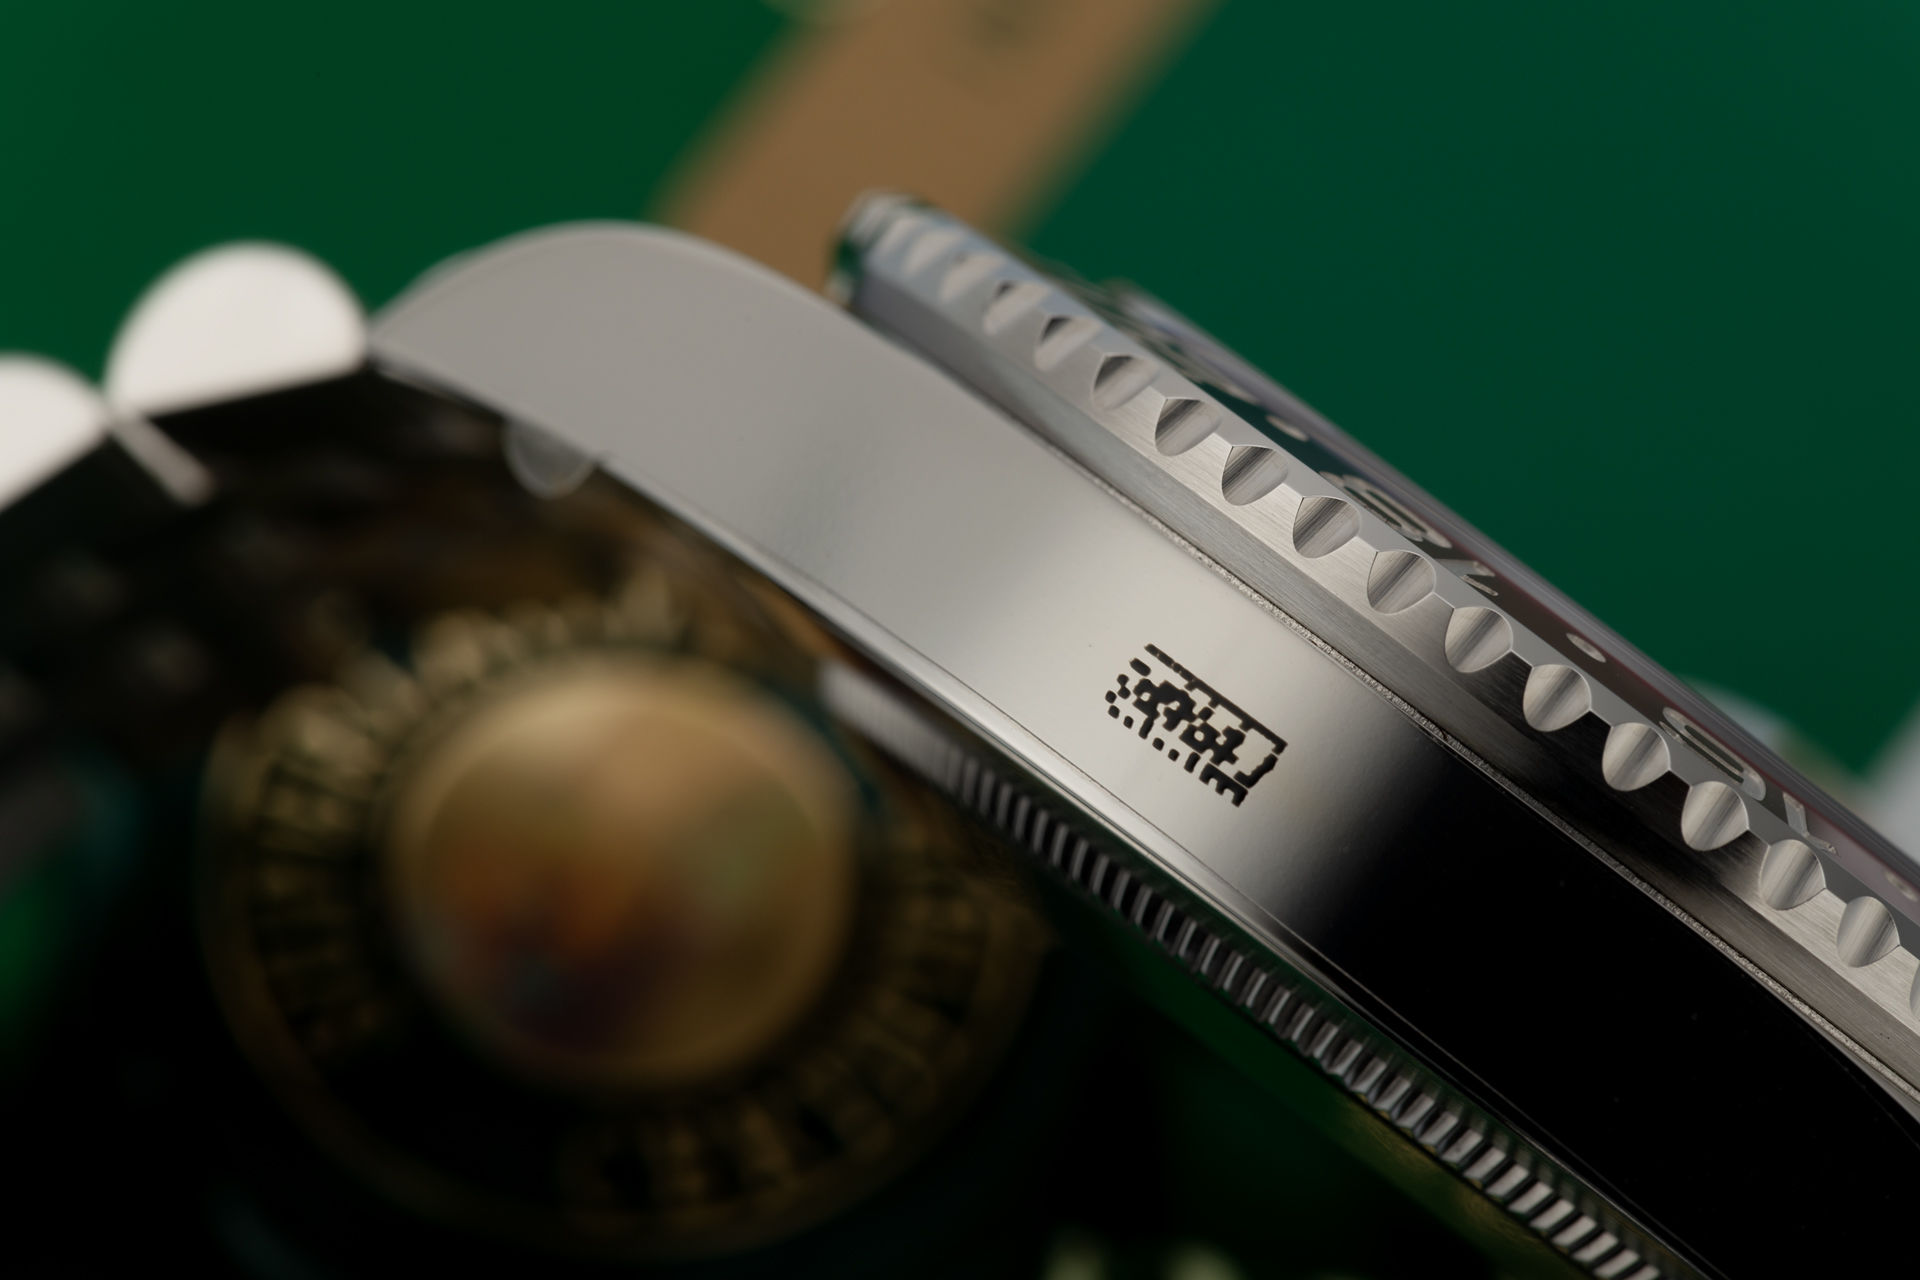 ref 126710BLRO | Brand New 'Full Set' | Rolex GMT-Master II